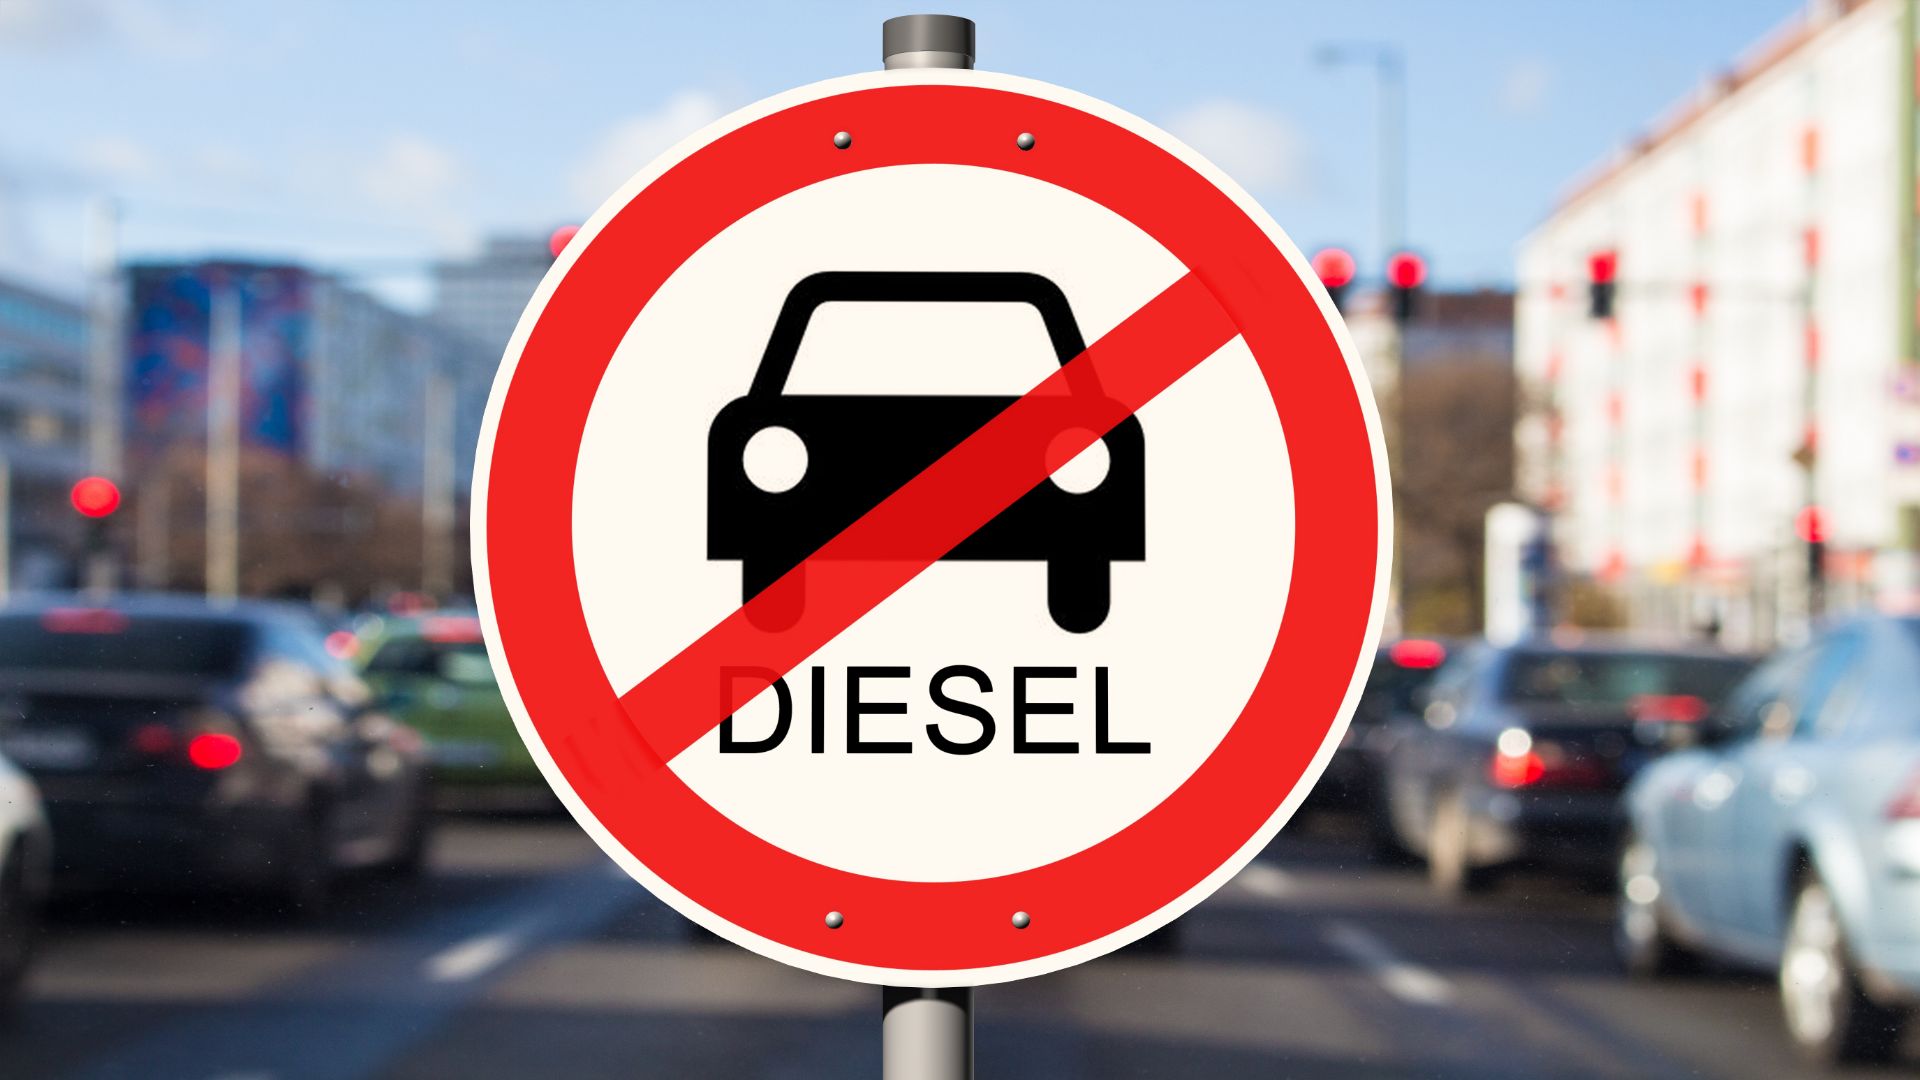 'make or break' for diesel in 2020